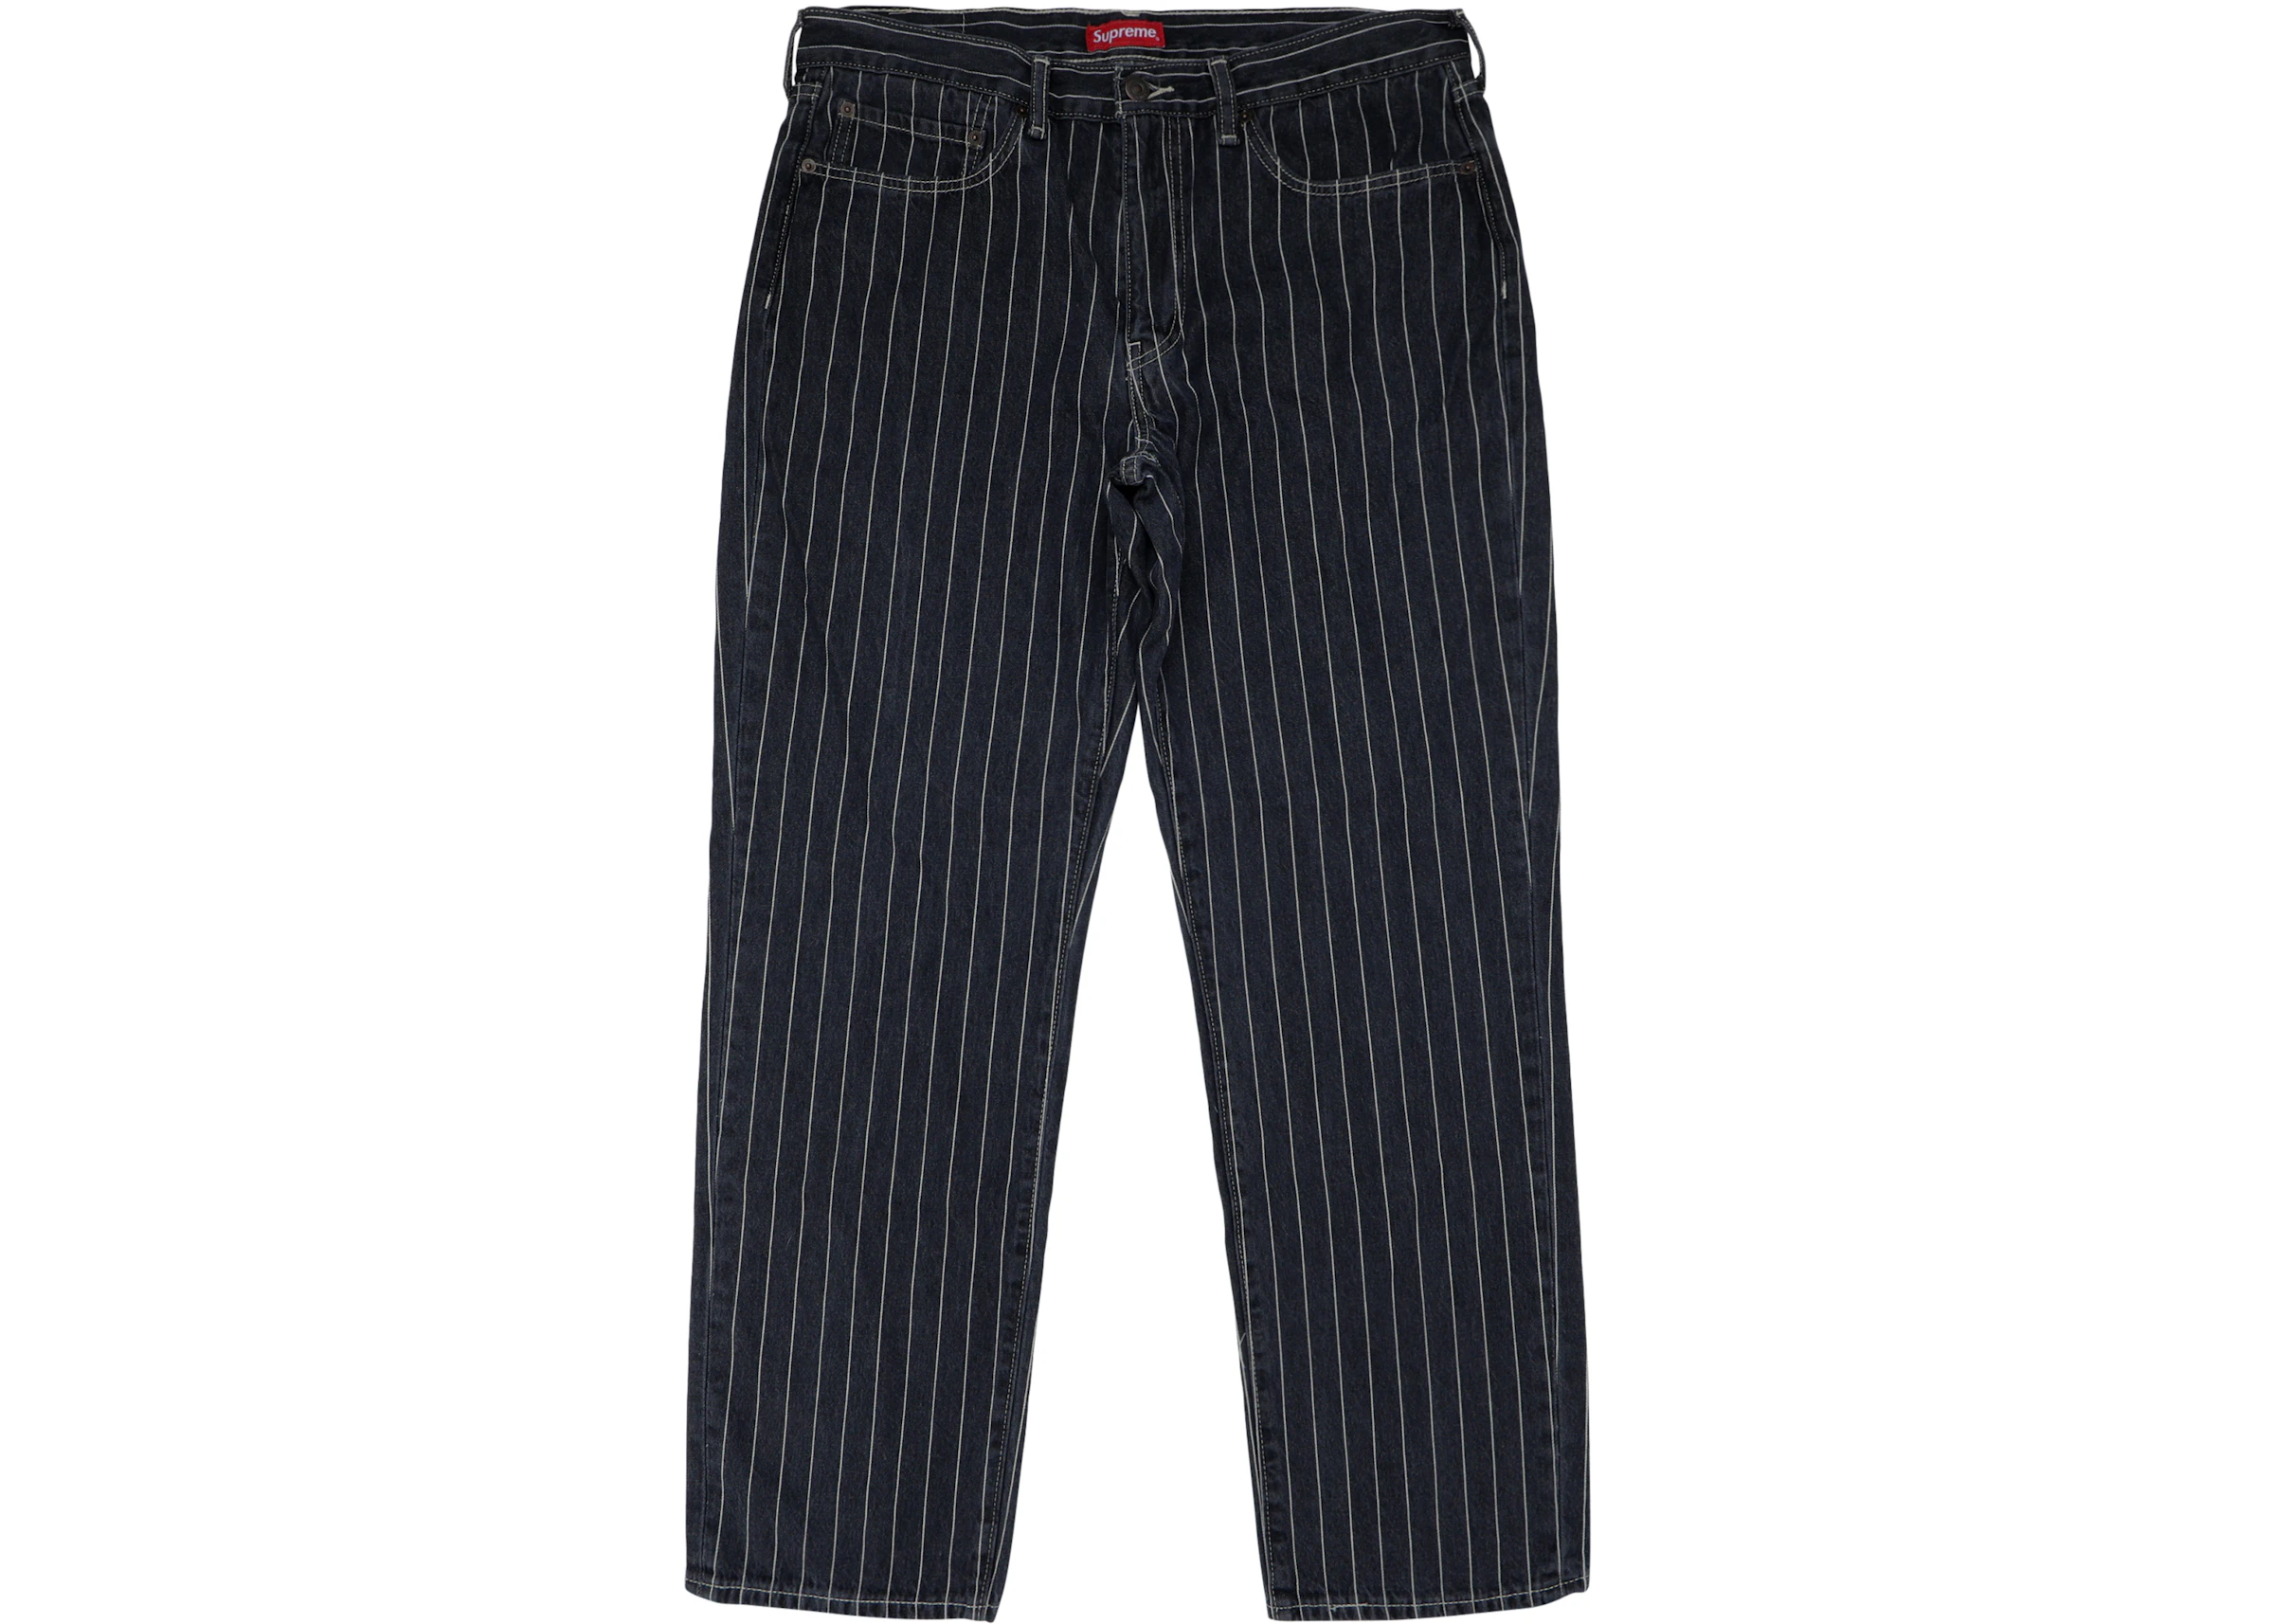 Supreme Levi's Pinstripe 550 Jeans Black - SS18 - US